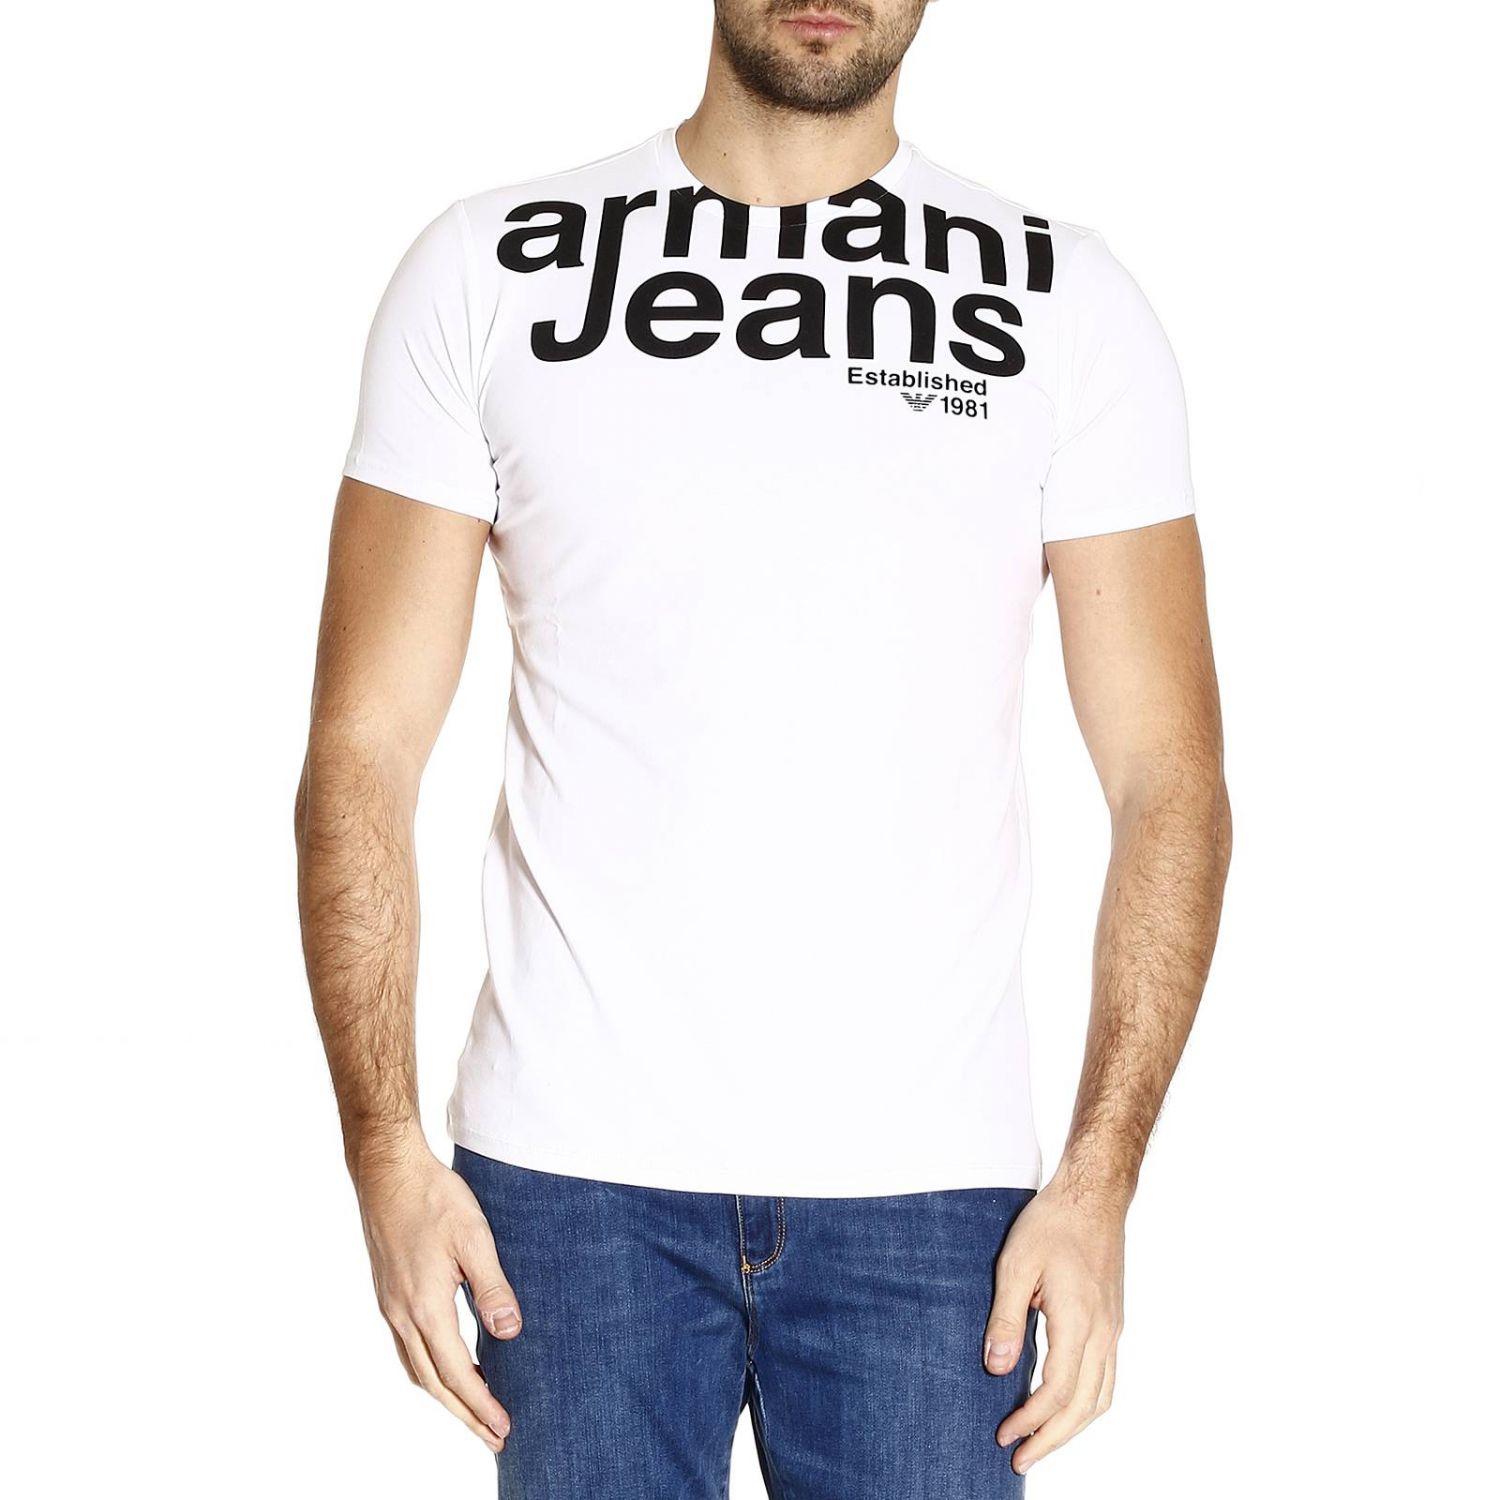 armani jeans 1981 t shirt